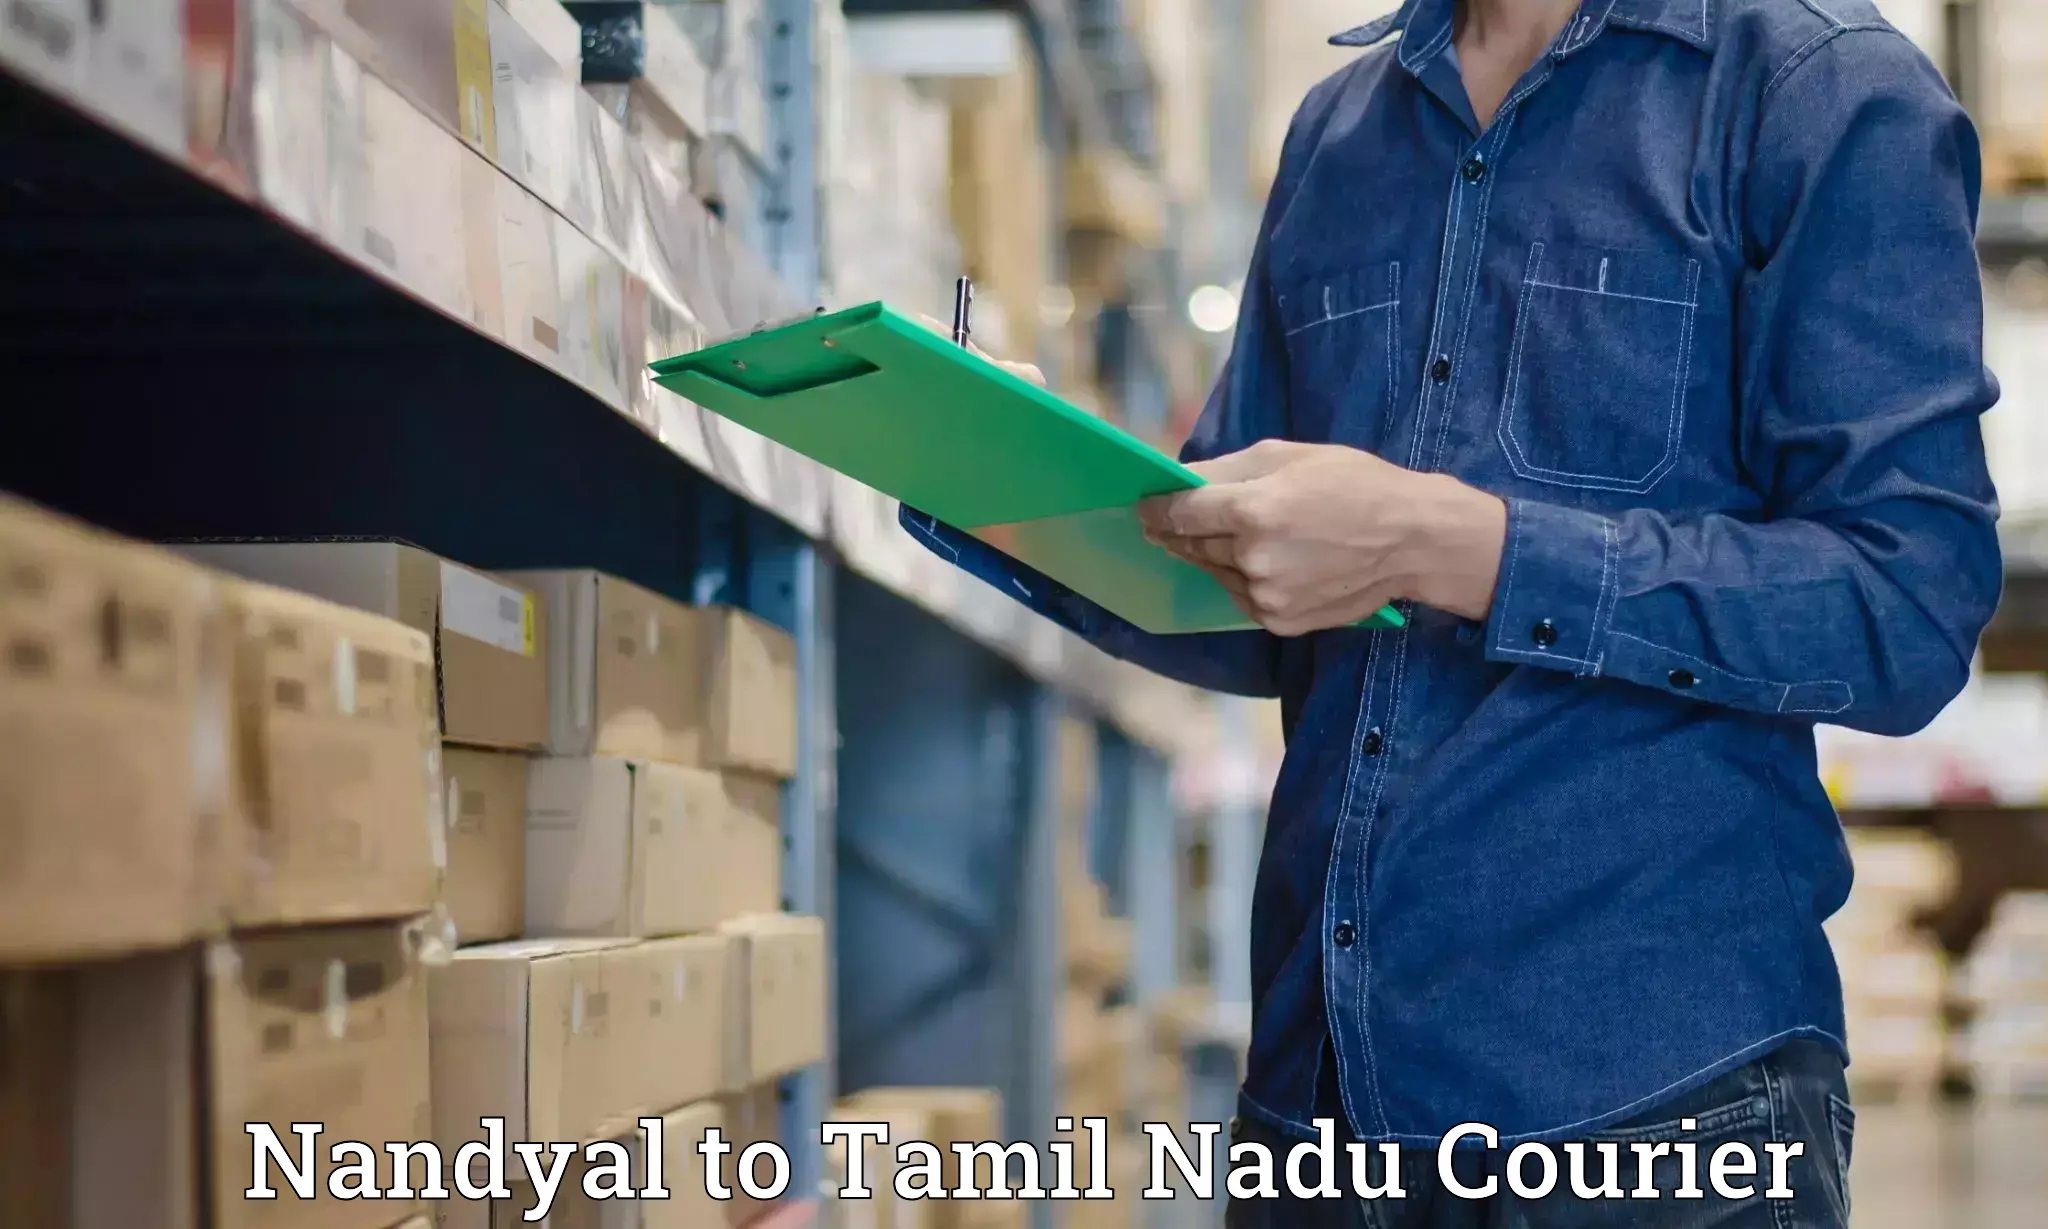 Global logistics network Nandyal to Eral